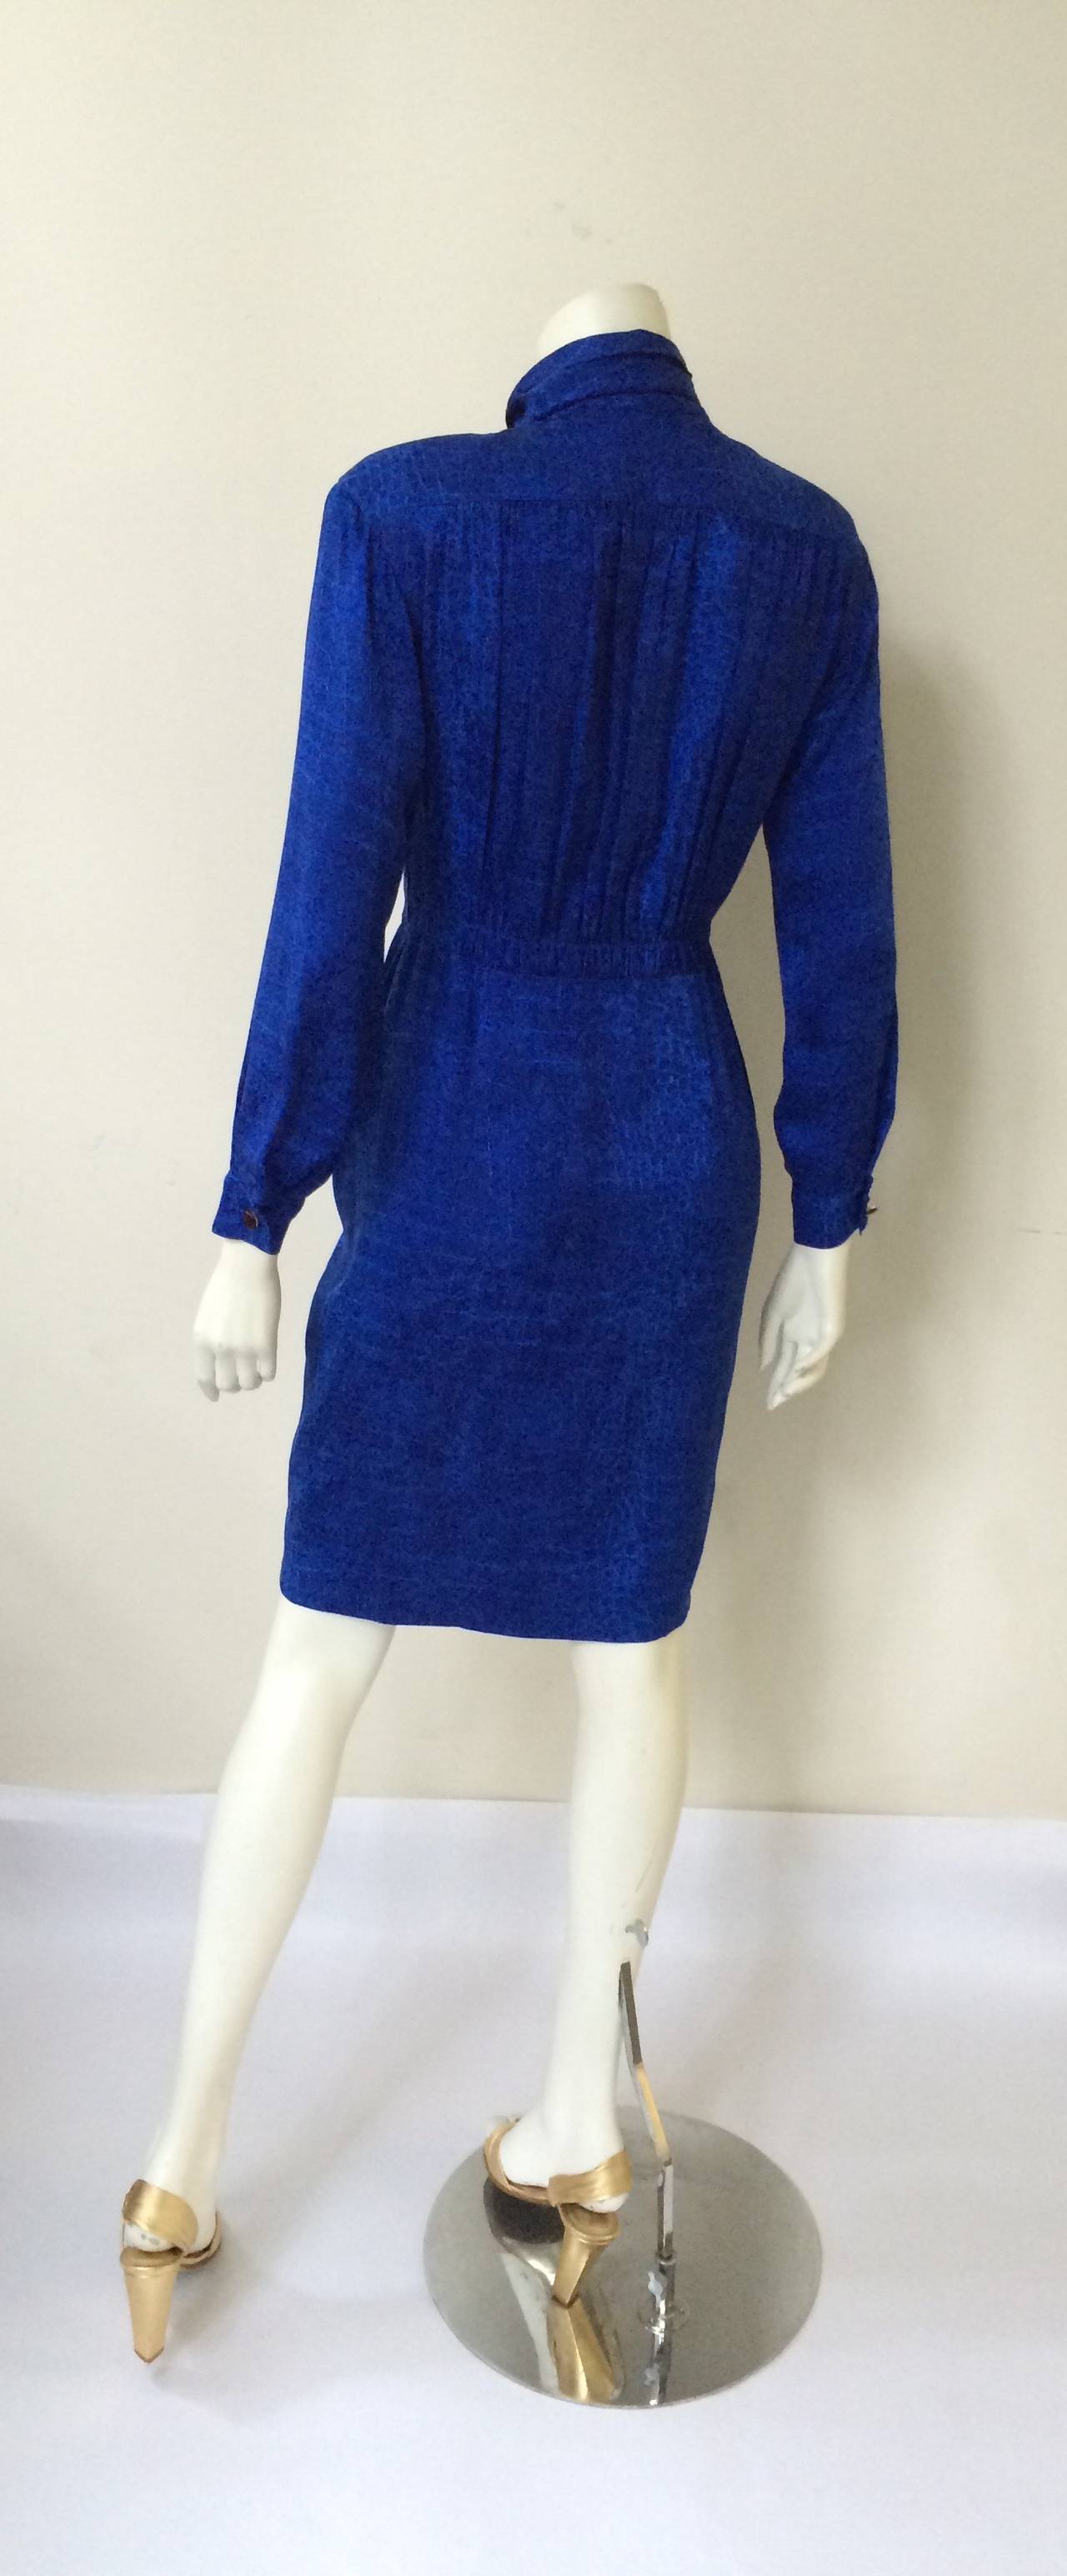 Women's Ungaro Parallele Paris 80s silk dress size 6.